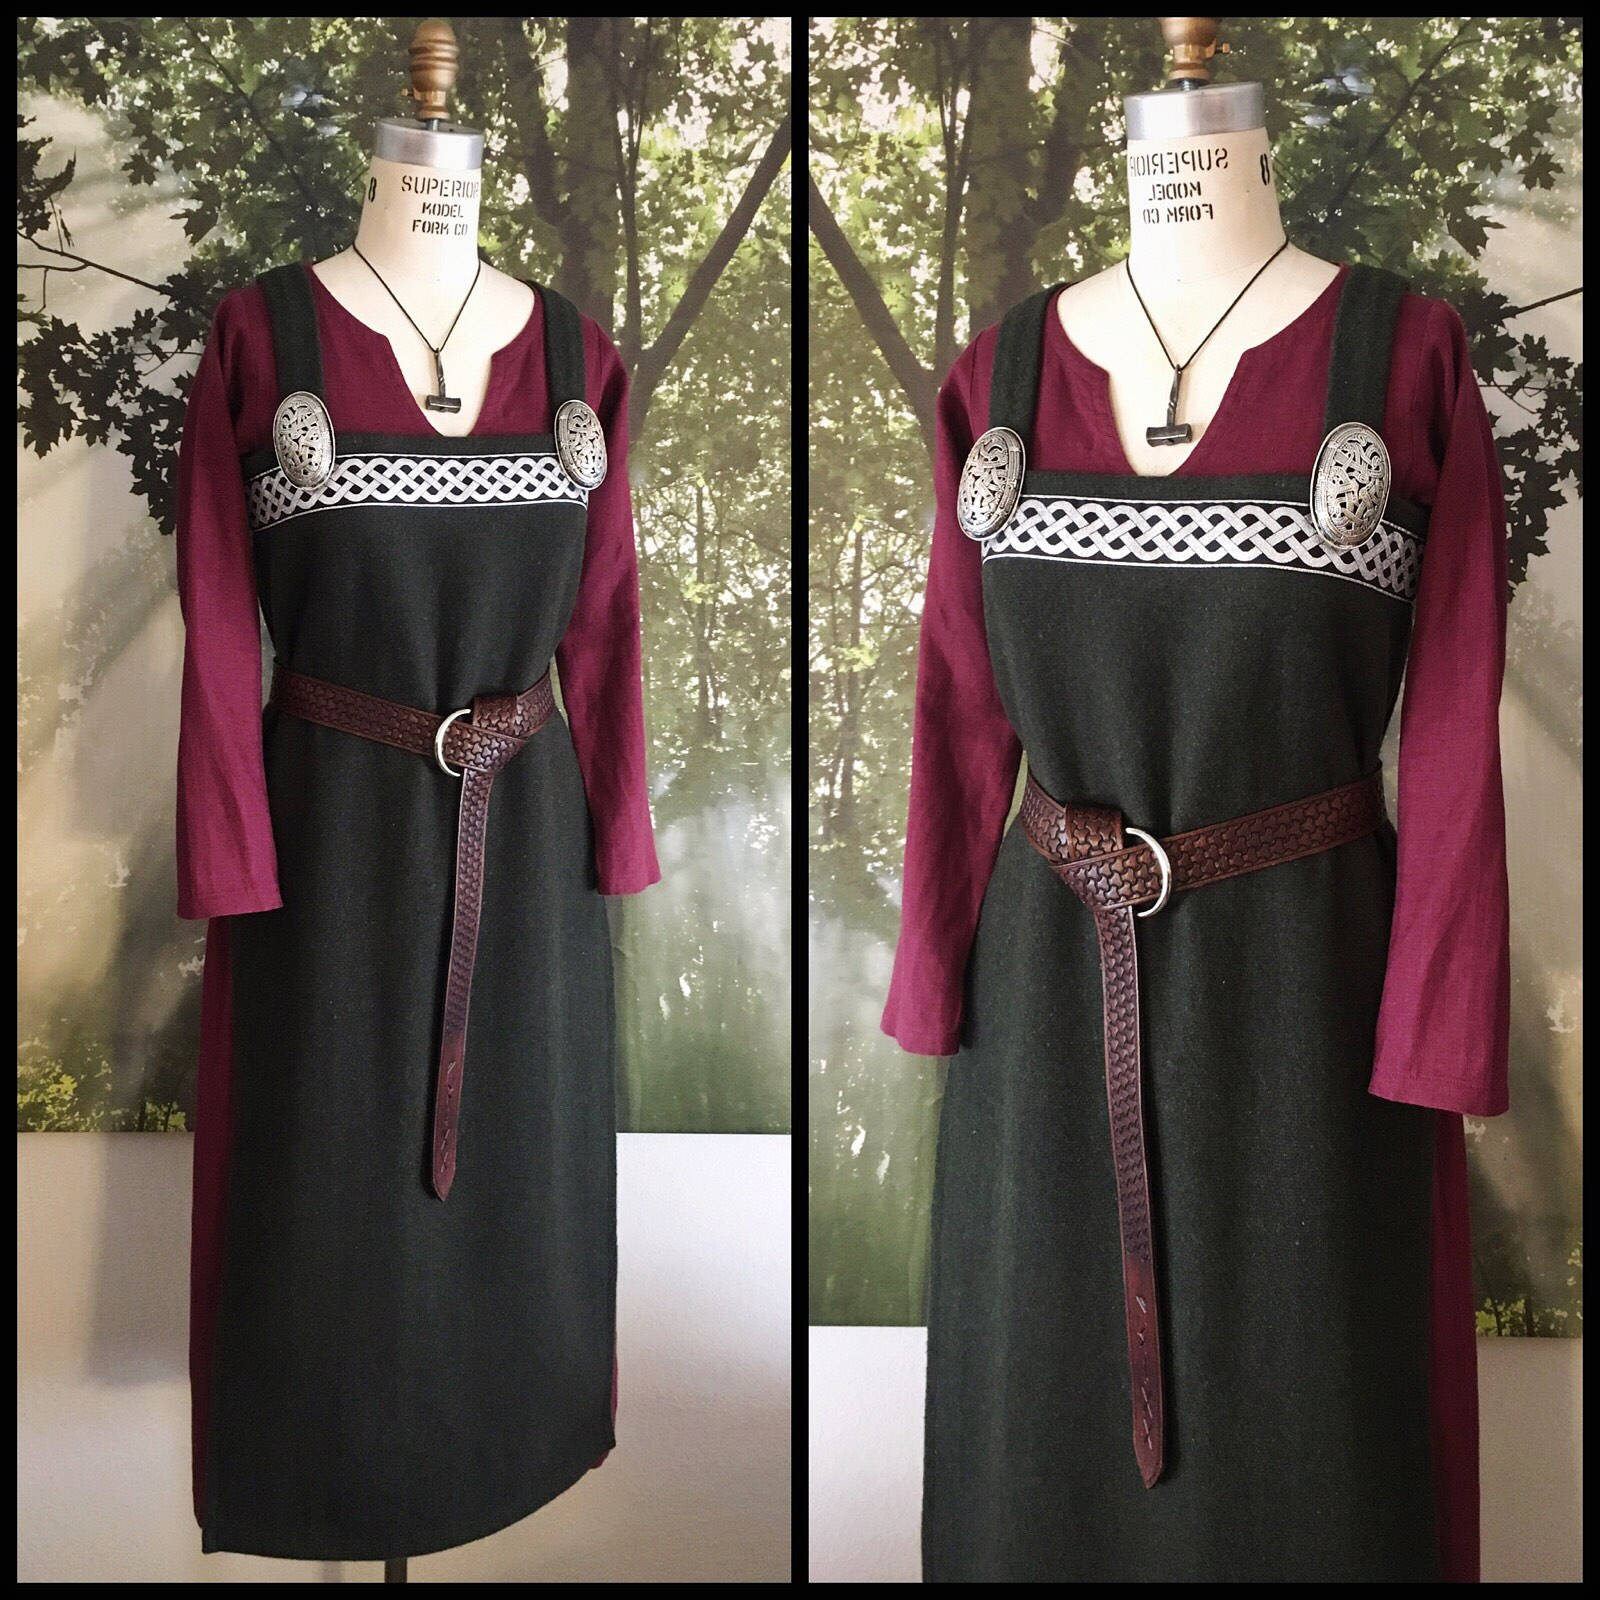 Viking linen hangerock apron dress